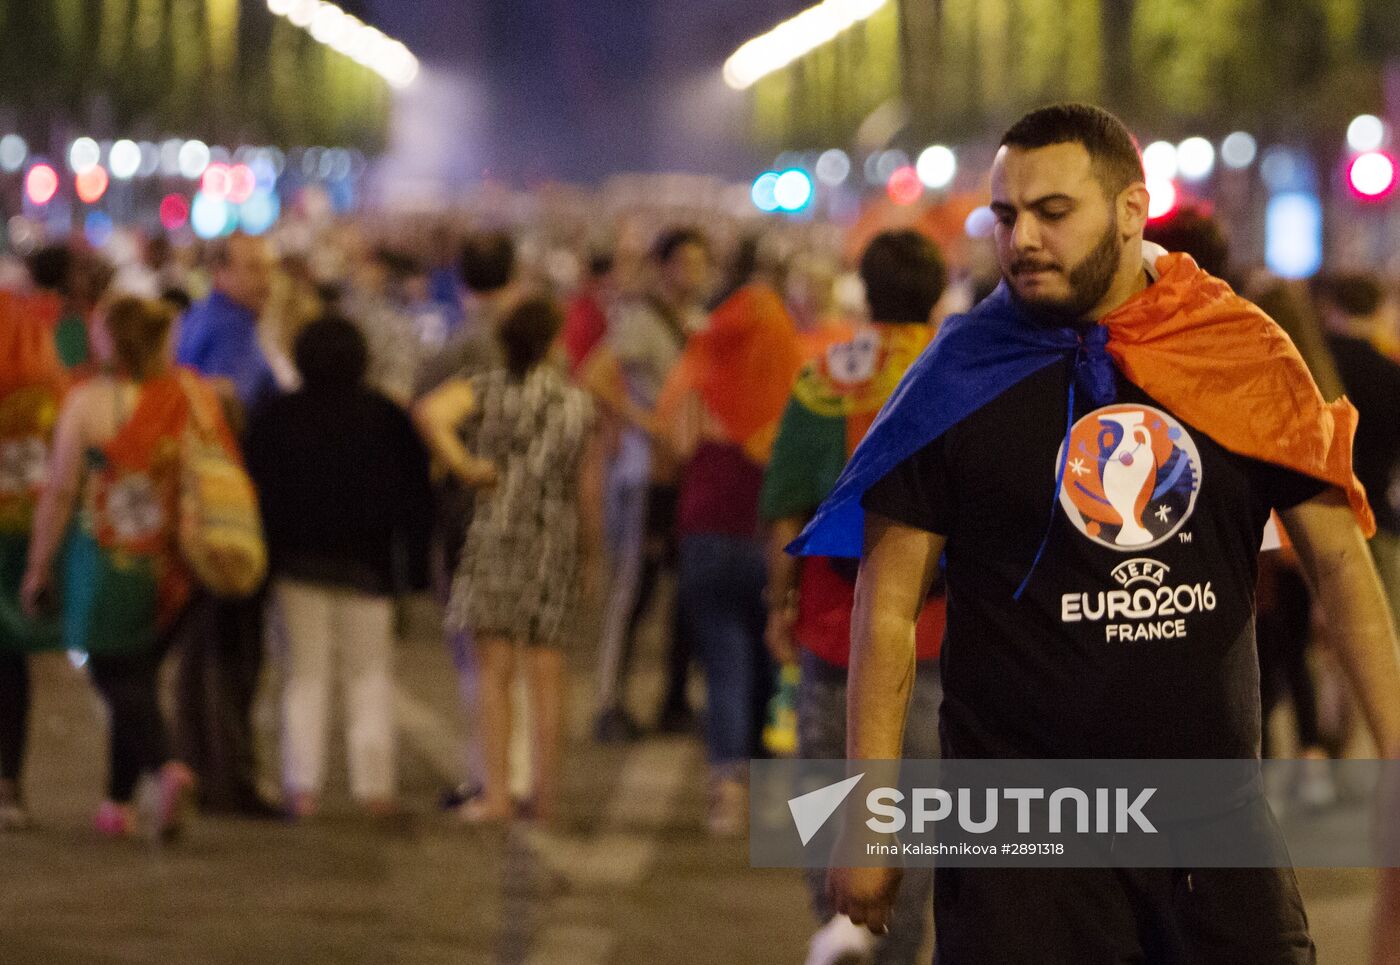 Fans after UEFA Euro 2016 final in Paris